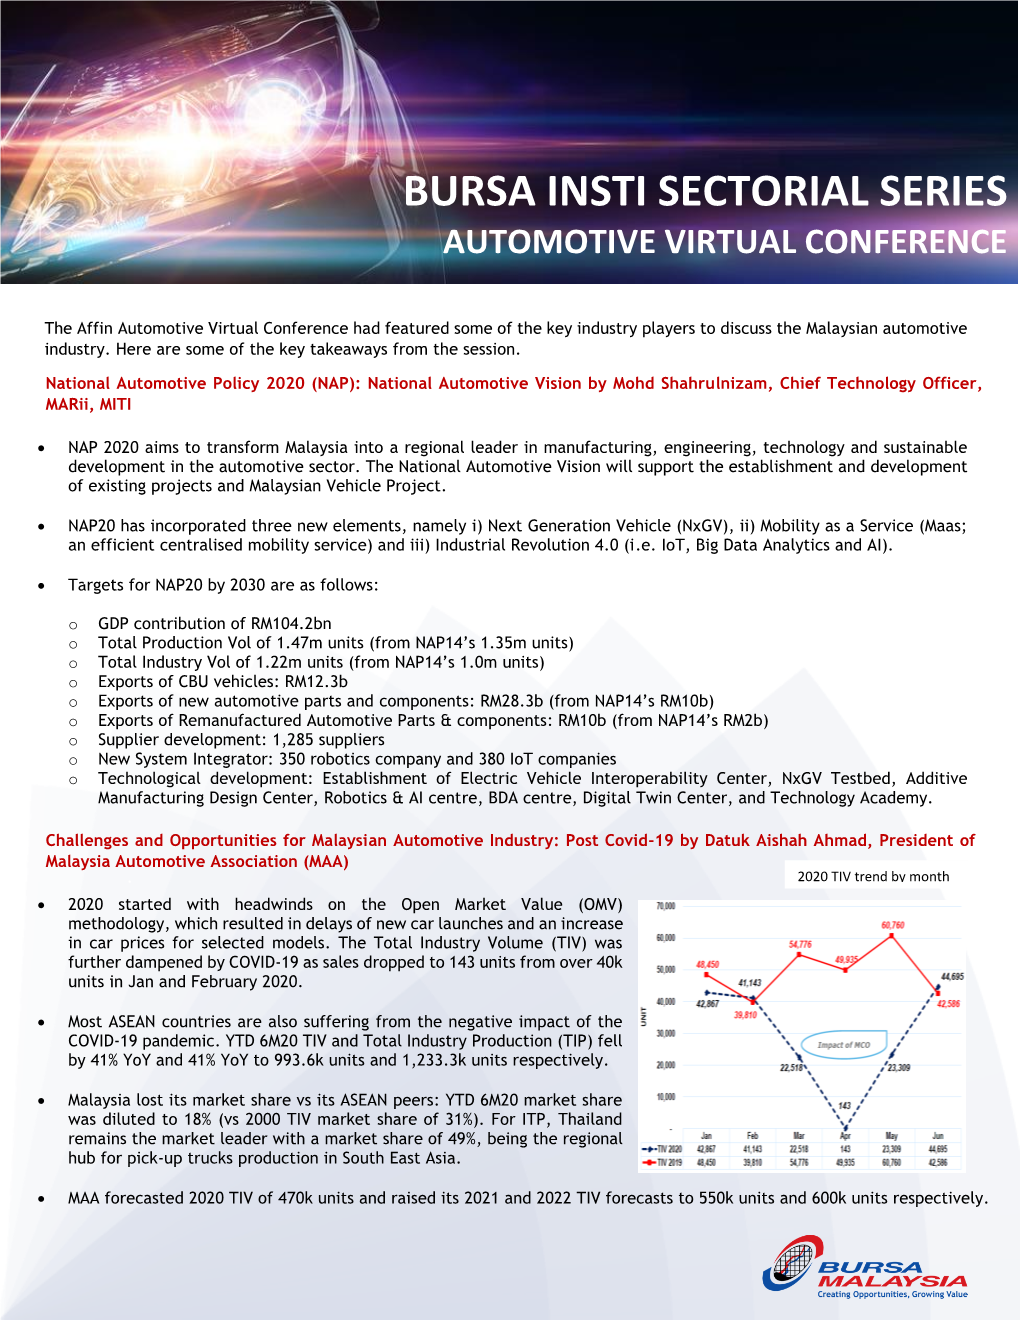 Bursa Insti Sectorial Series Automotive Virtual Conference